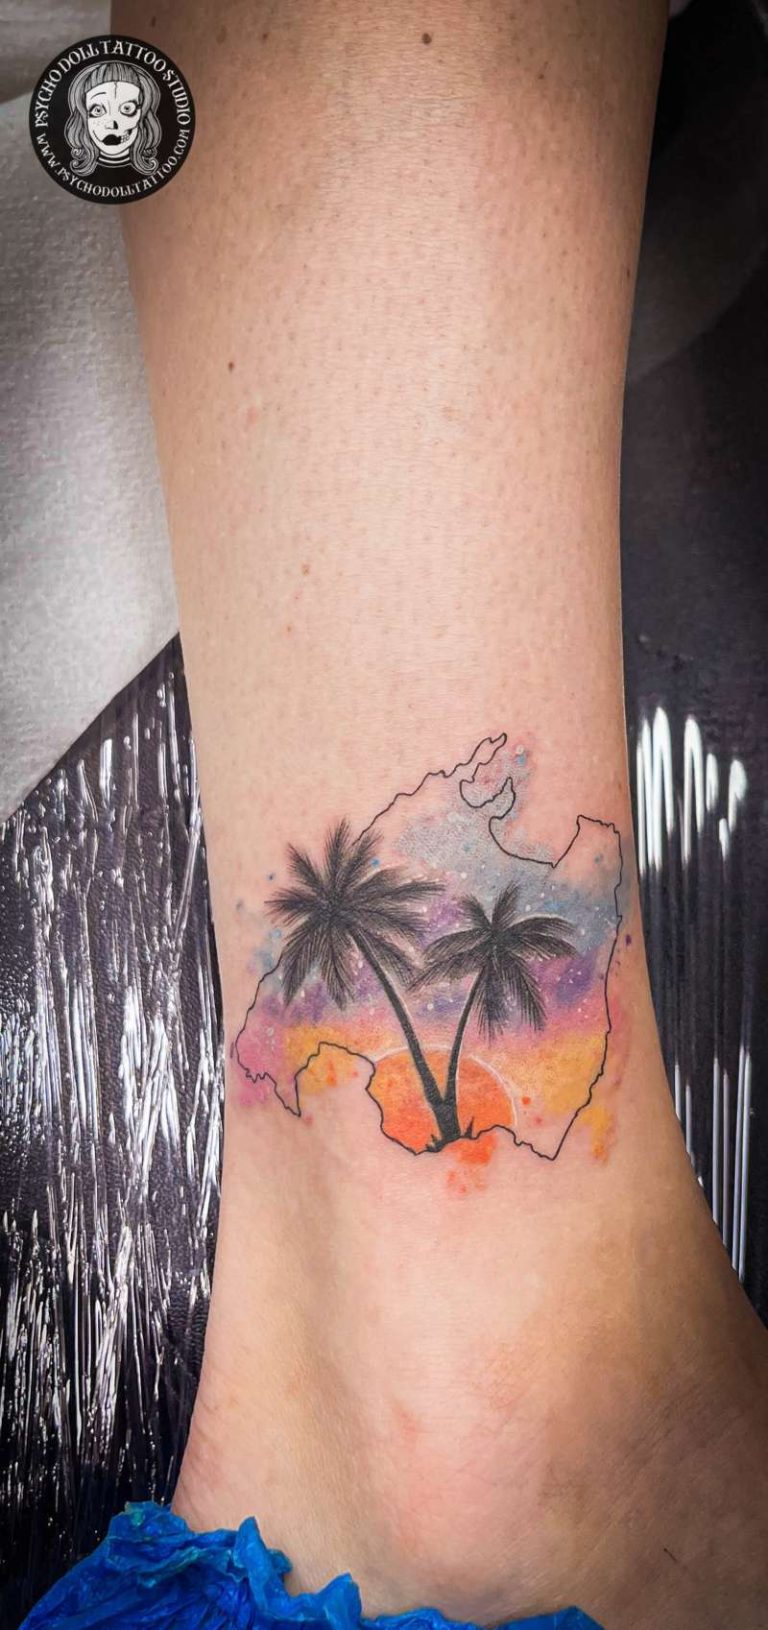 tatuaje isla de mallorca palmeras sol lugares